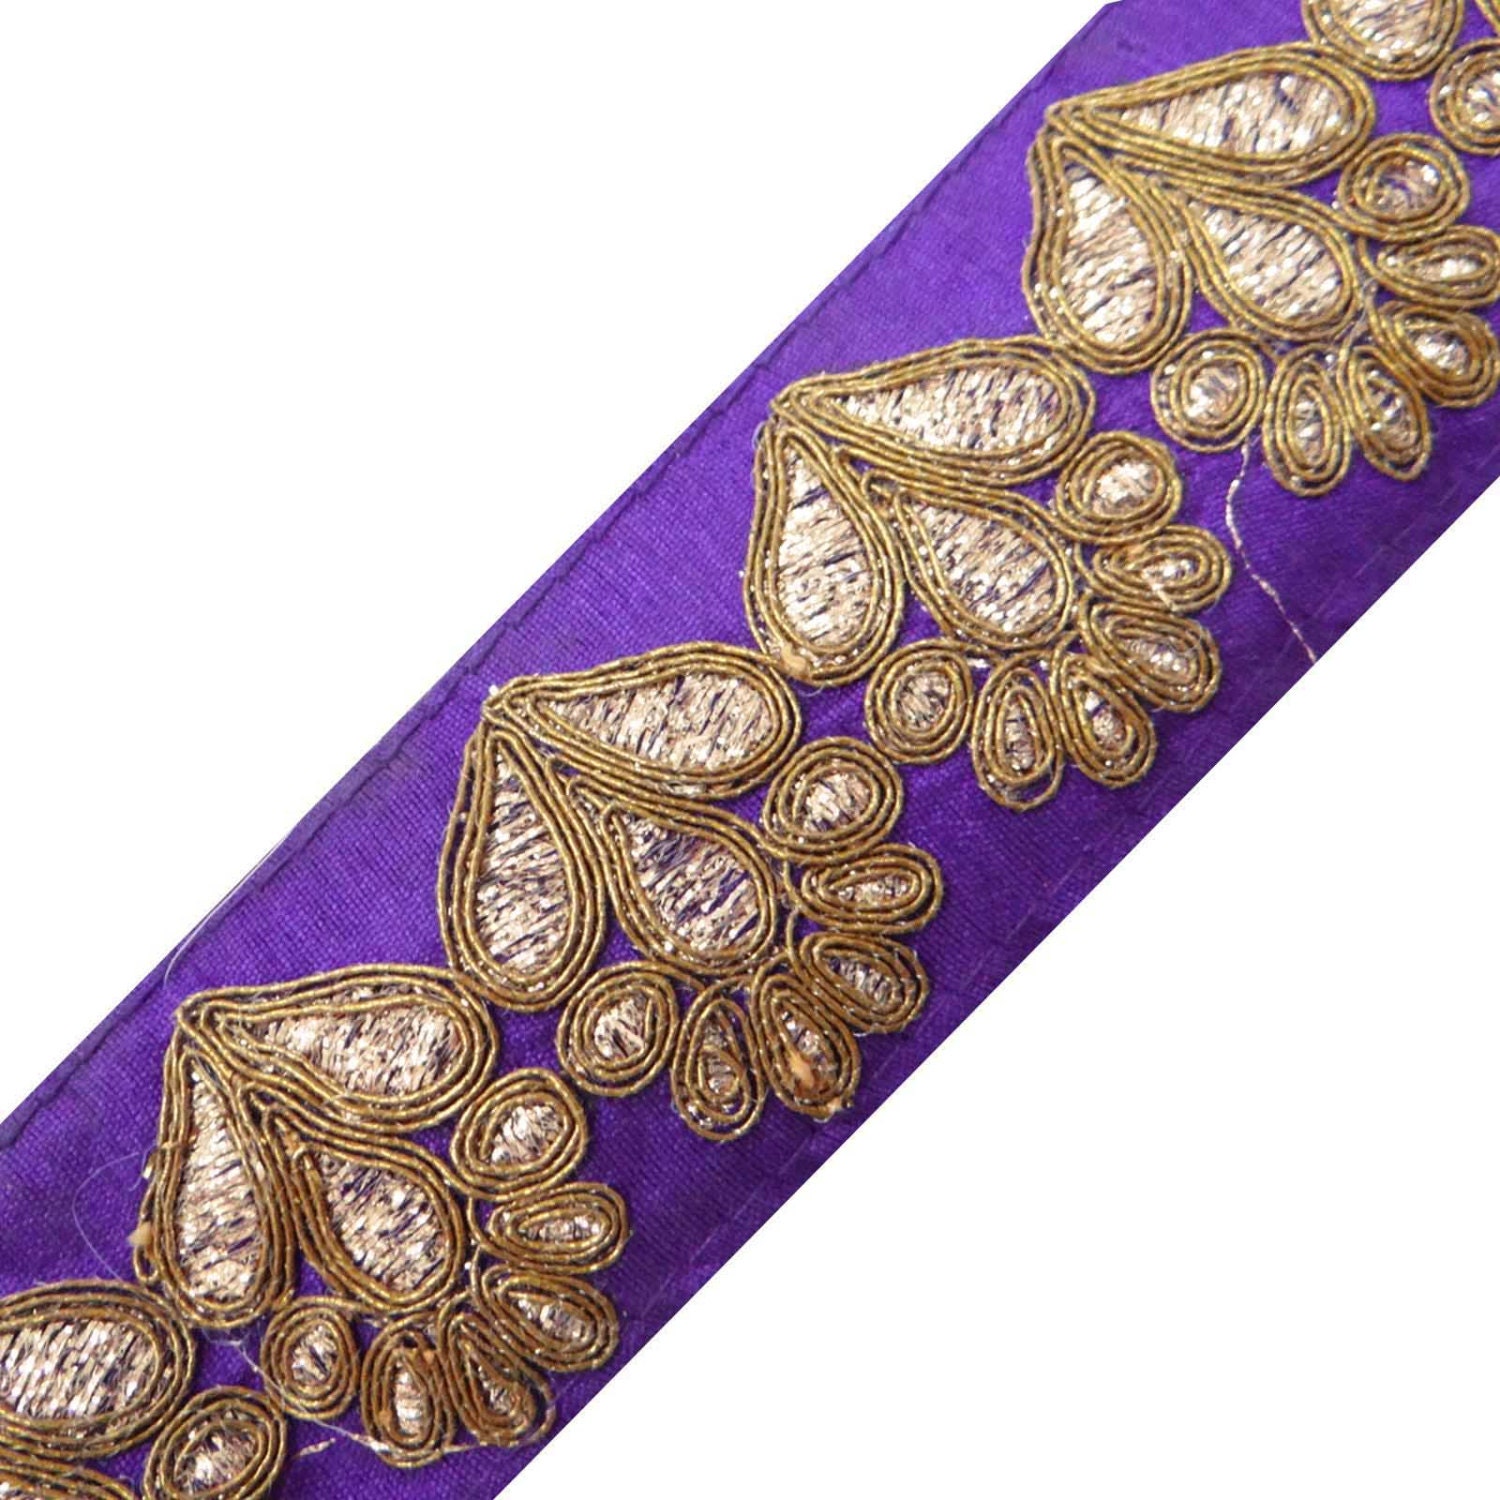 Purple Trim Designer Floral Embroidered Trim Sewing Ribbon